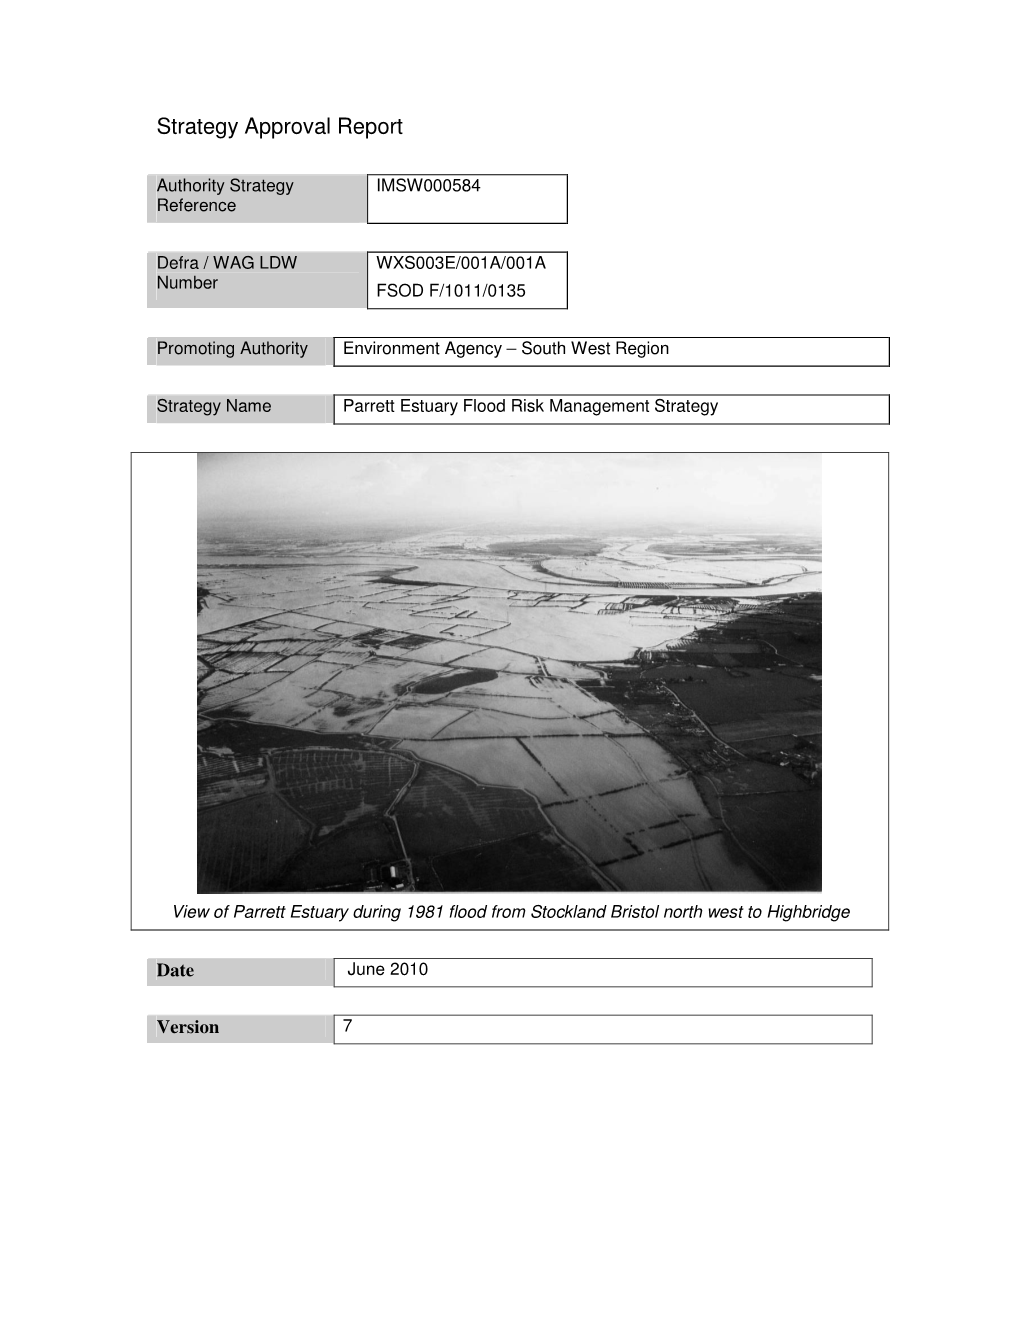 Parrett Estuary Flood Risk Management Strategy